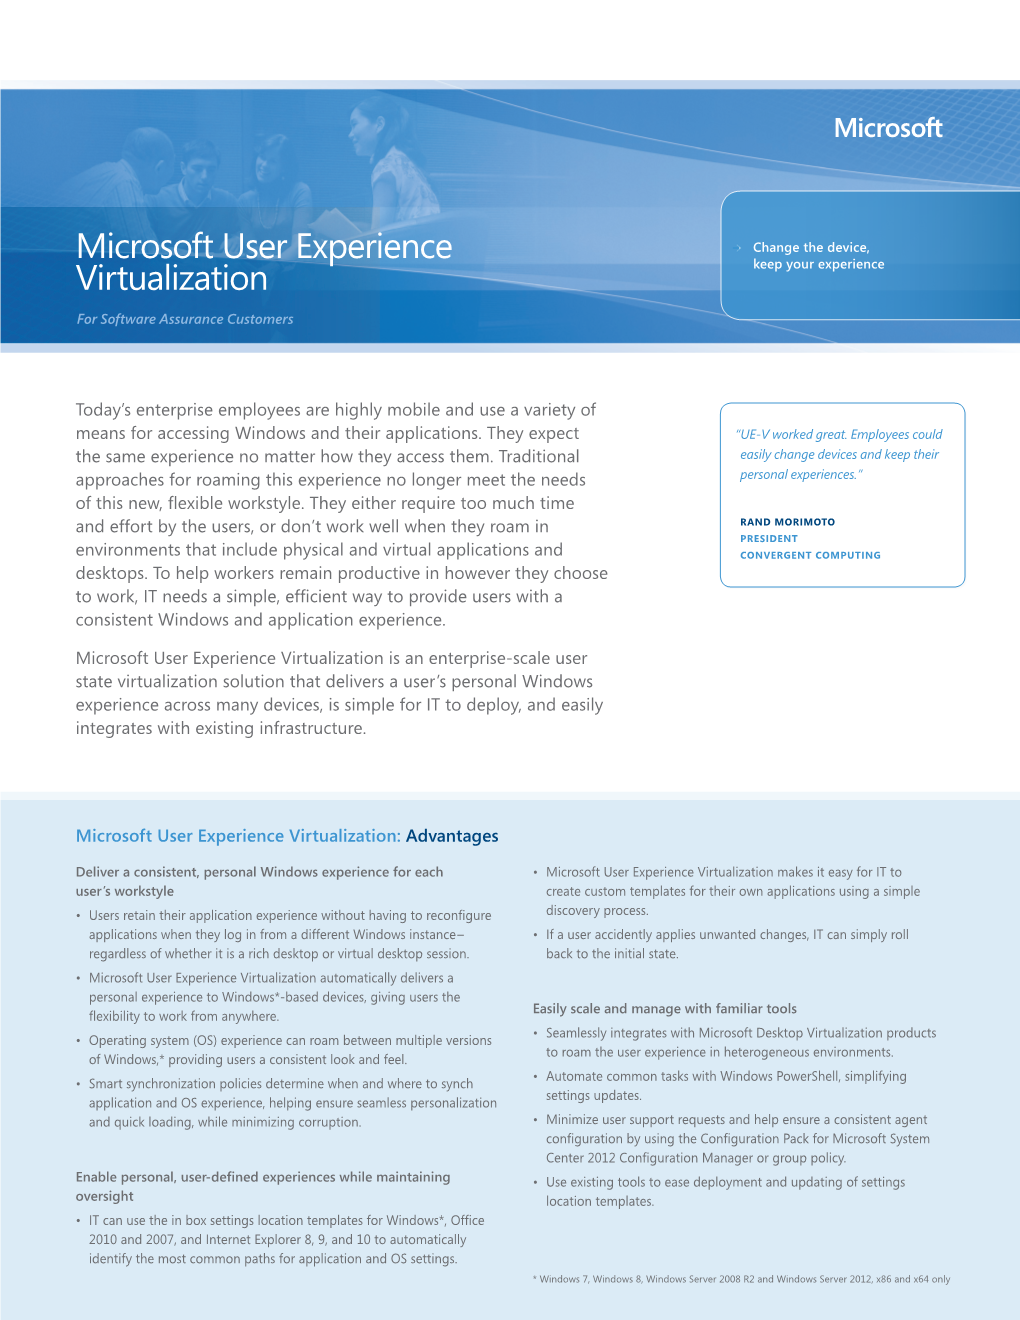 Microsoft User Experience Virtualization